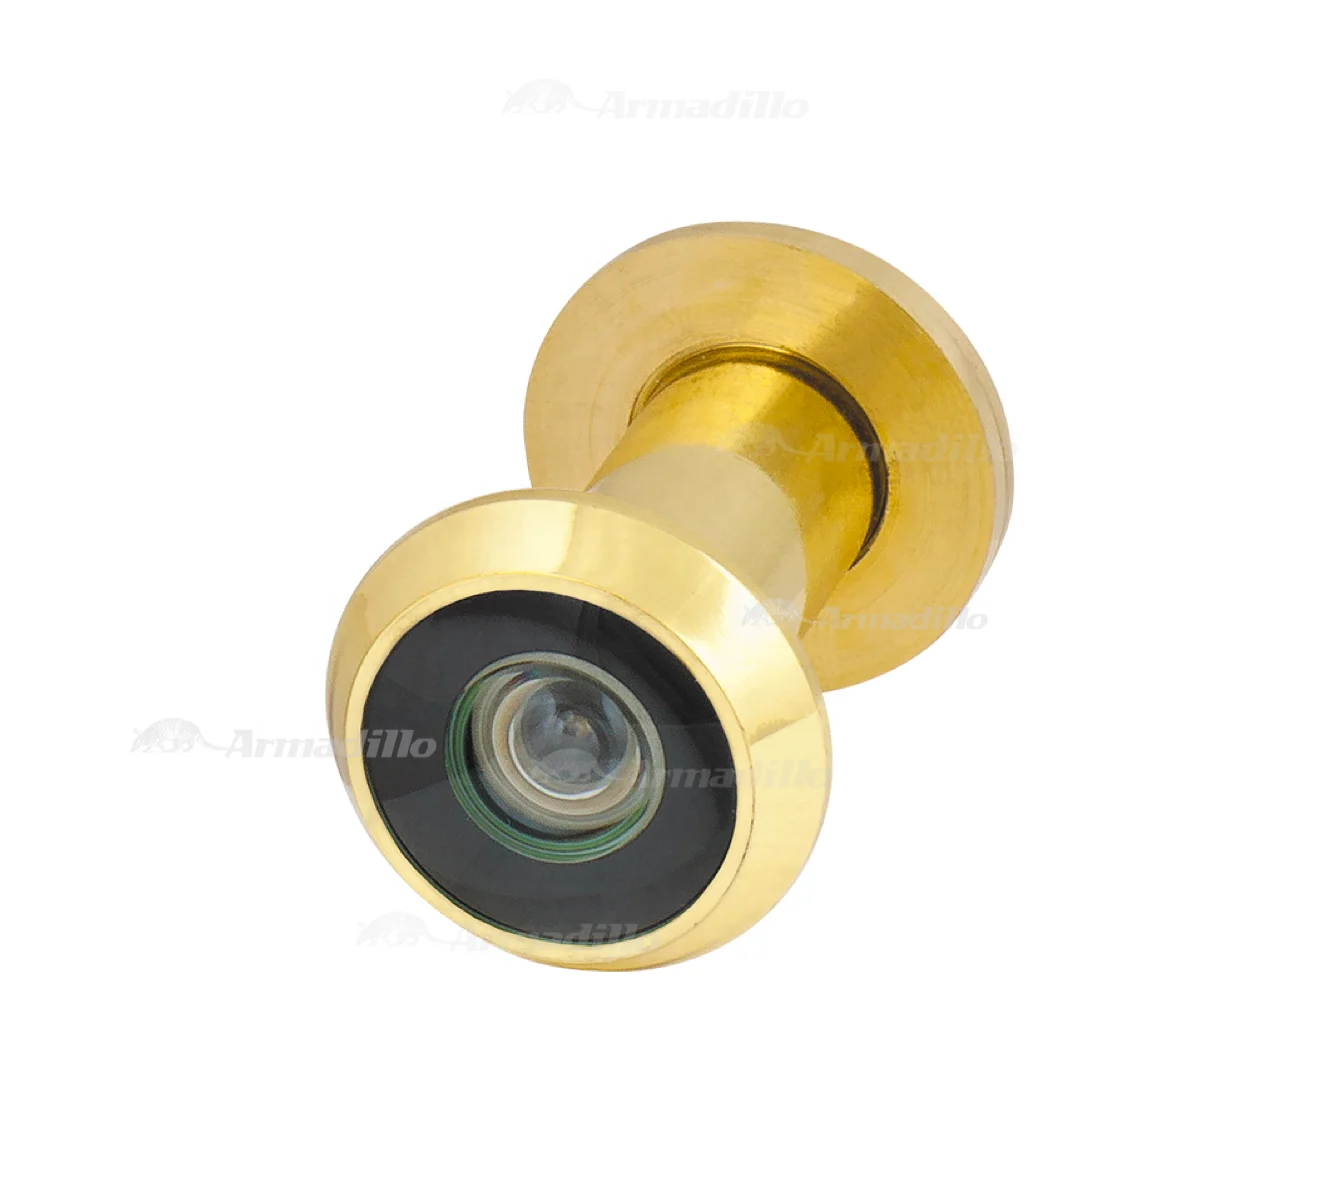 Hot Sale 200 Degree Plastic Lens Gold Plated Brass Door Eye Viewer Peephole